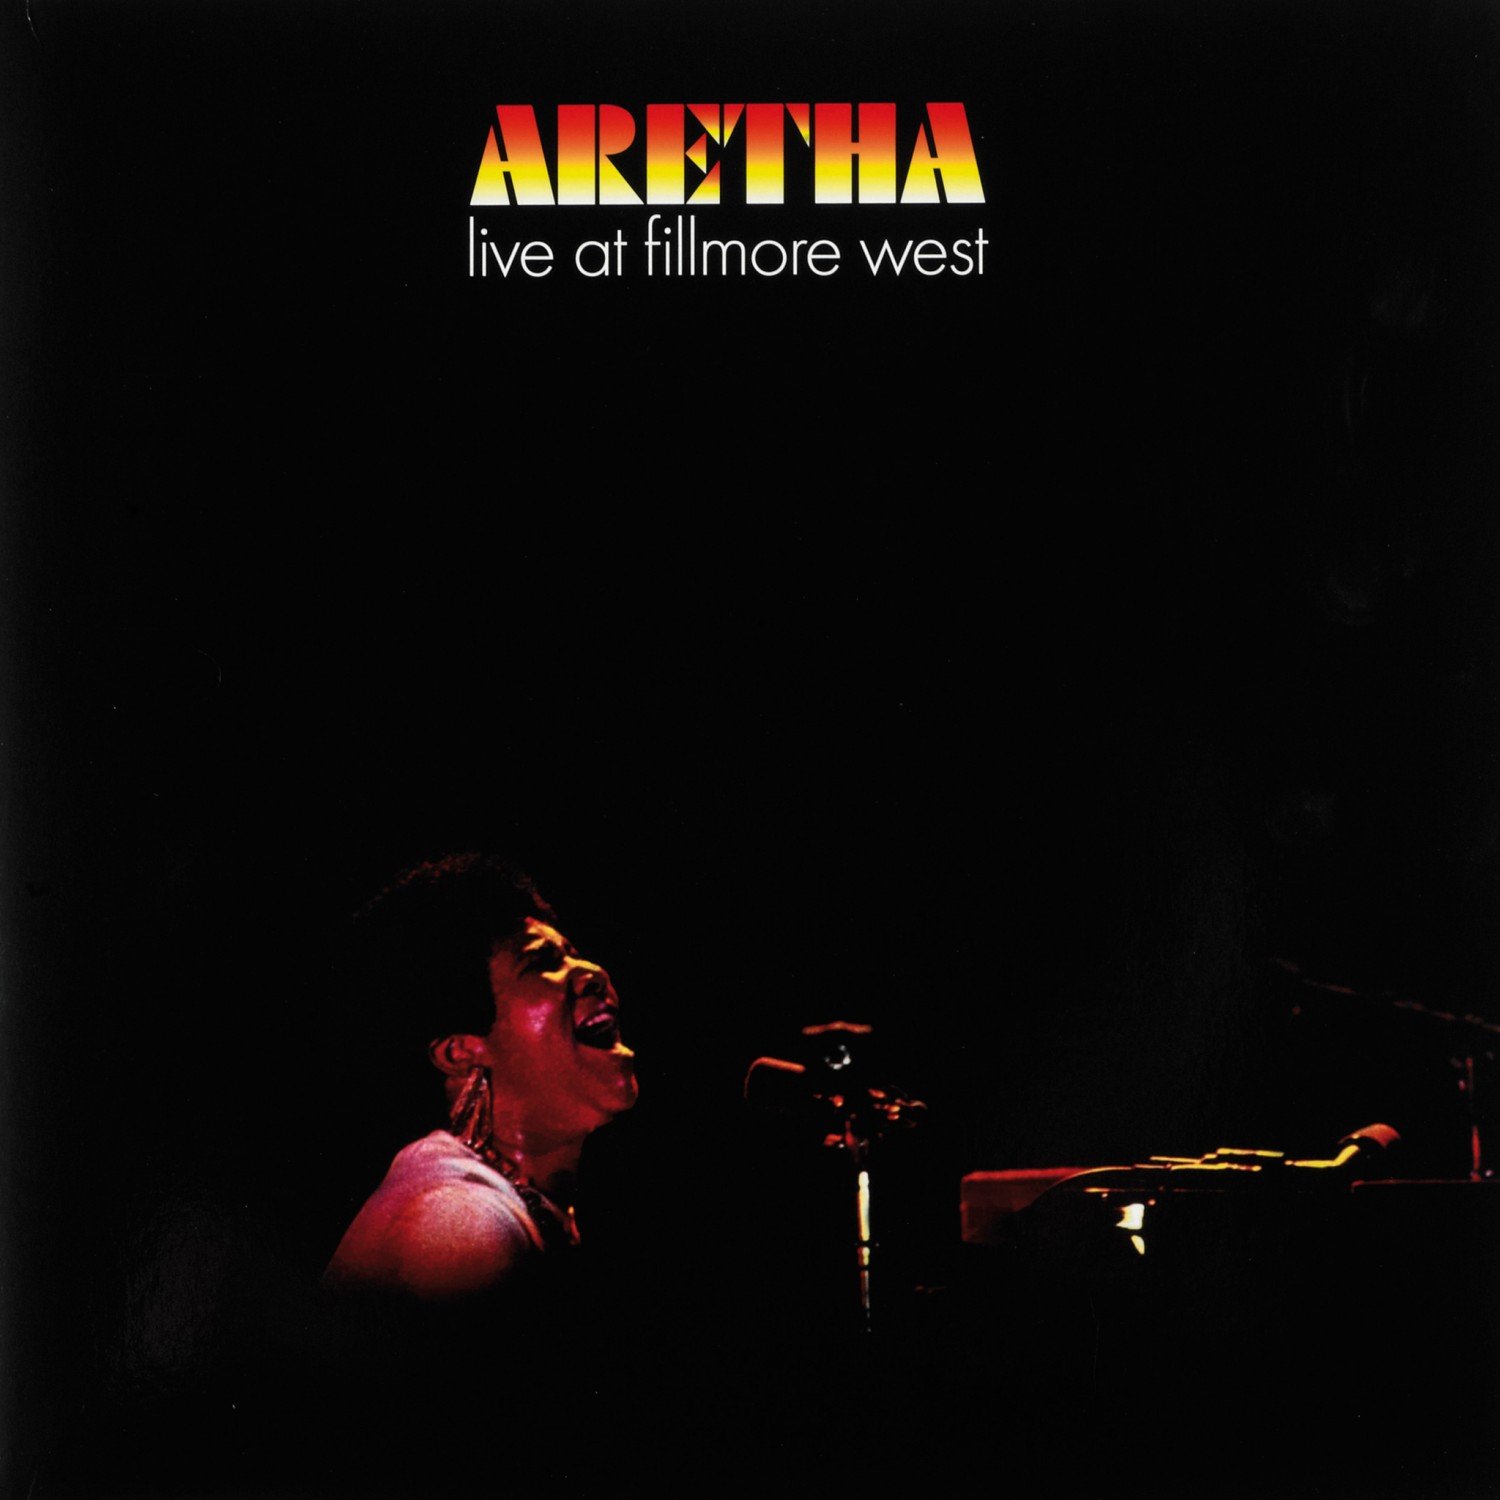 Арета Франклин – Aretha Live at Fillmore West (1971)